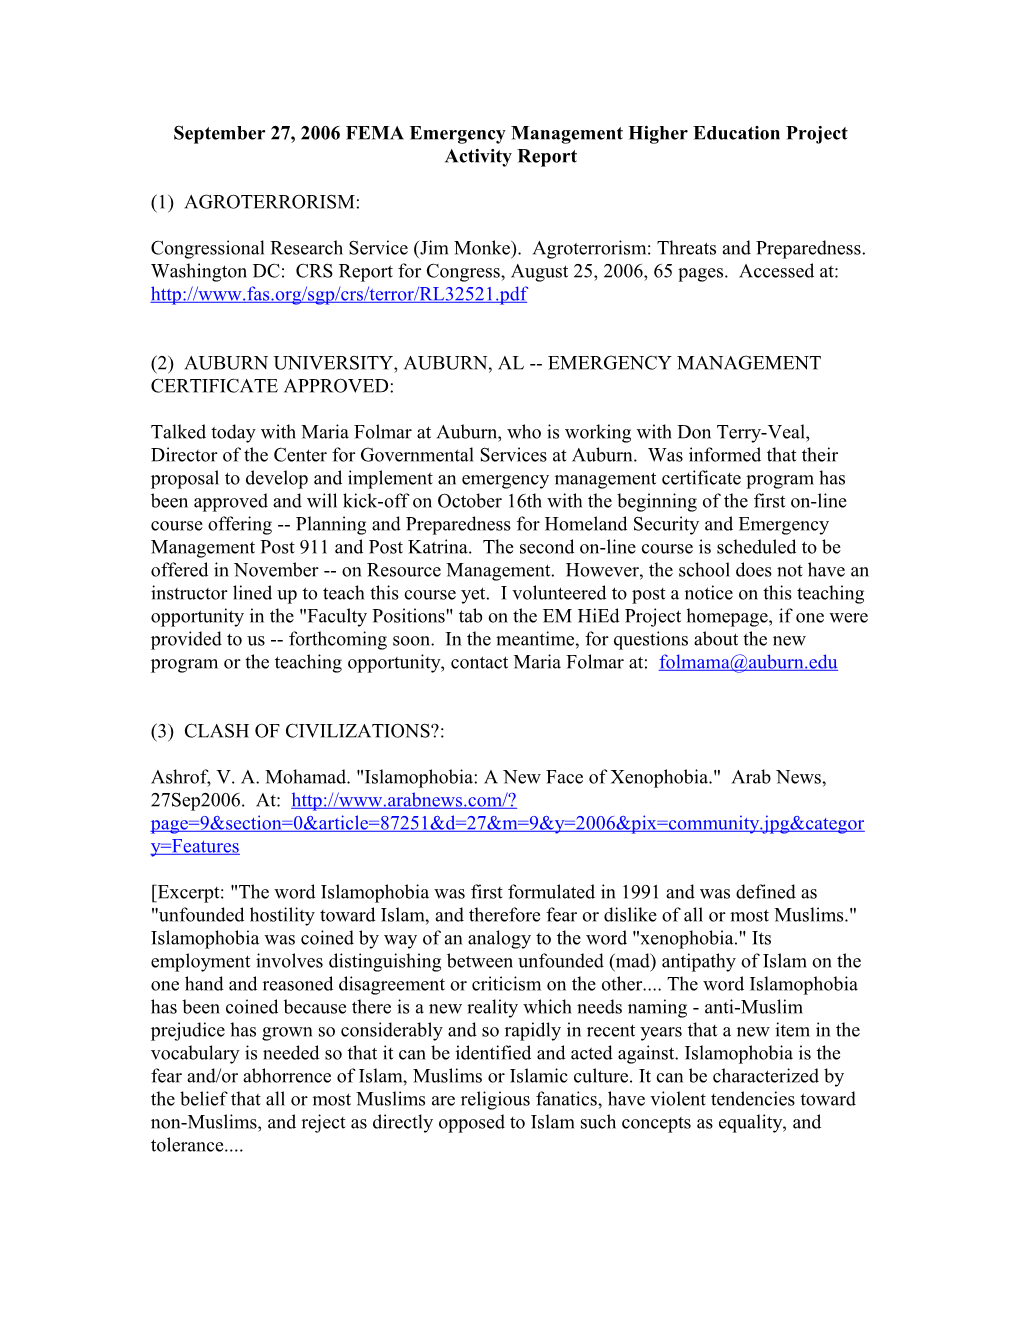 September 27, 2006 FEMA Emergency Management Higher Education Project Activity Report